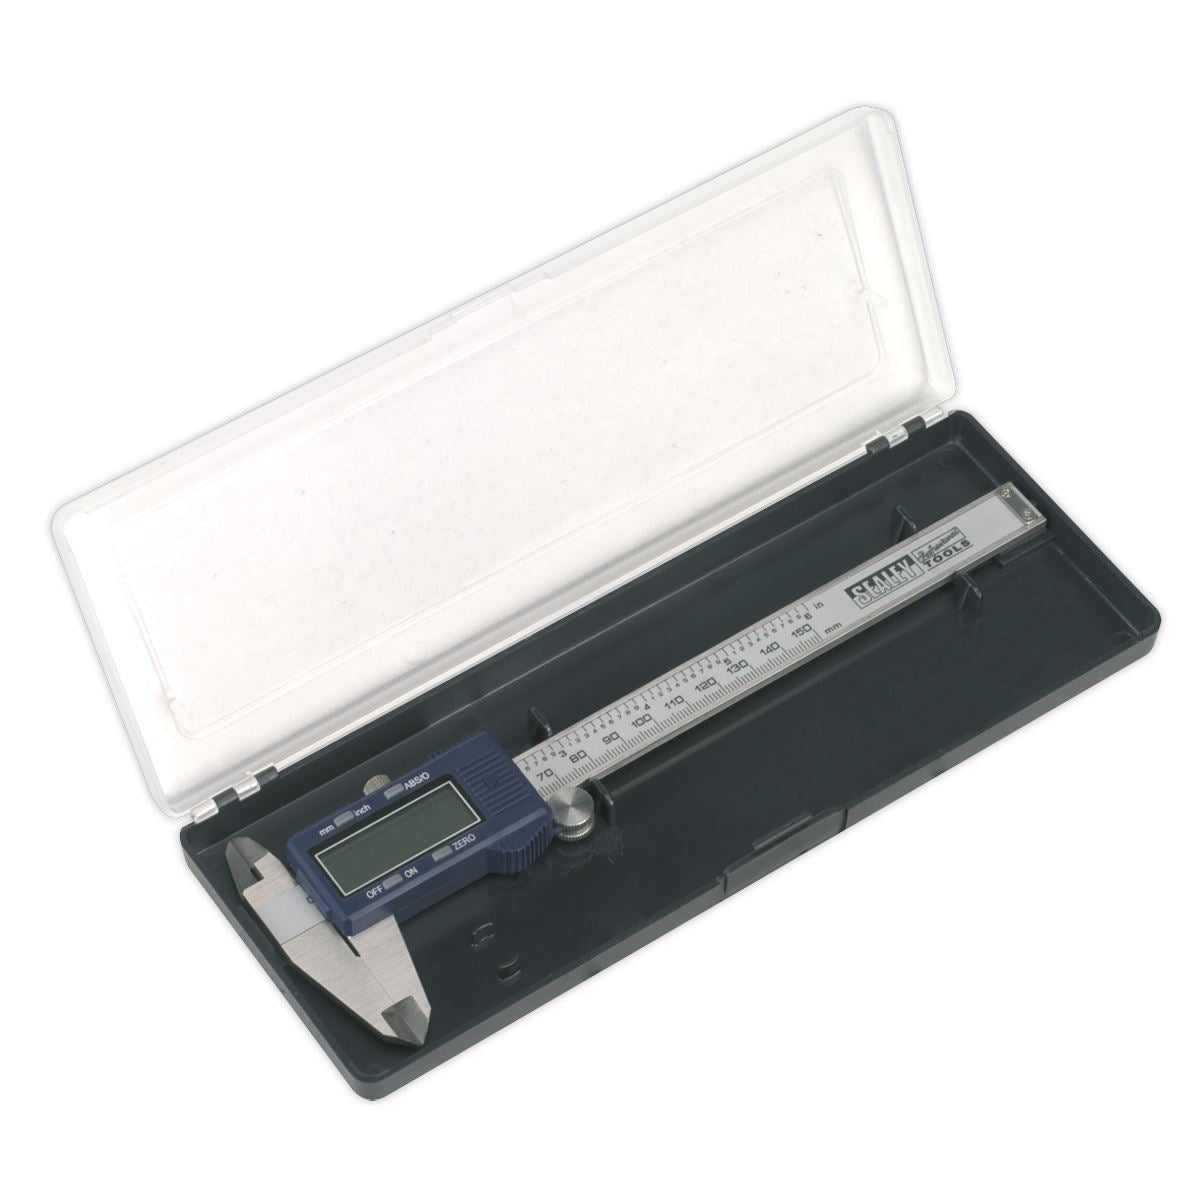 Sealey Digital Vernier Caliper 0-150mm(0-6") AK962EV